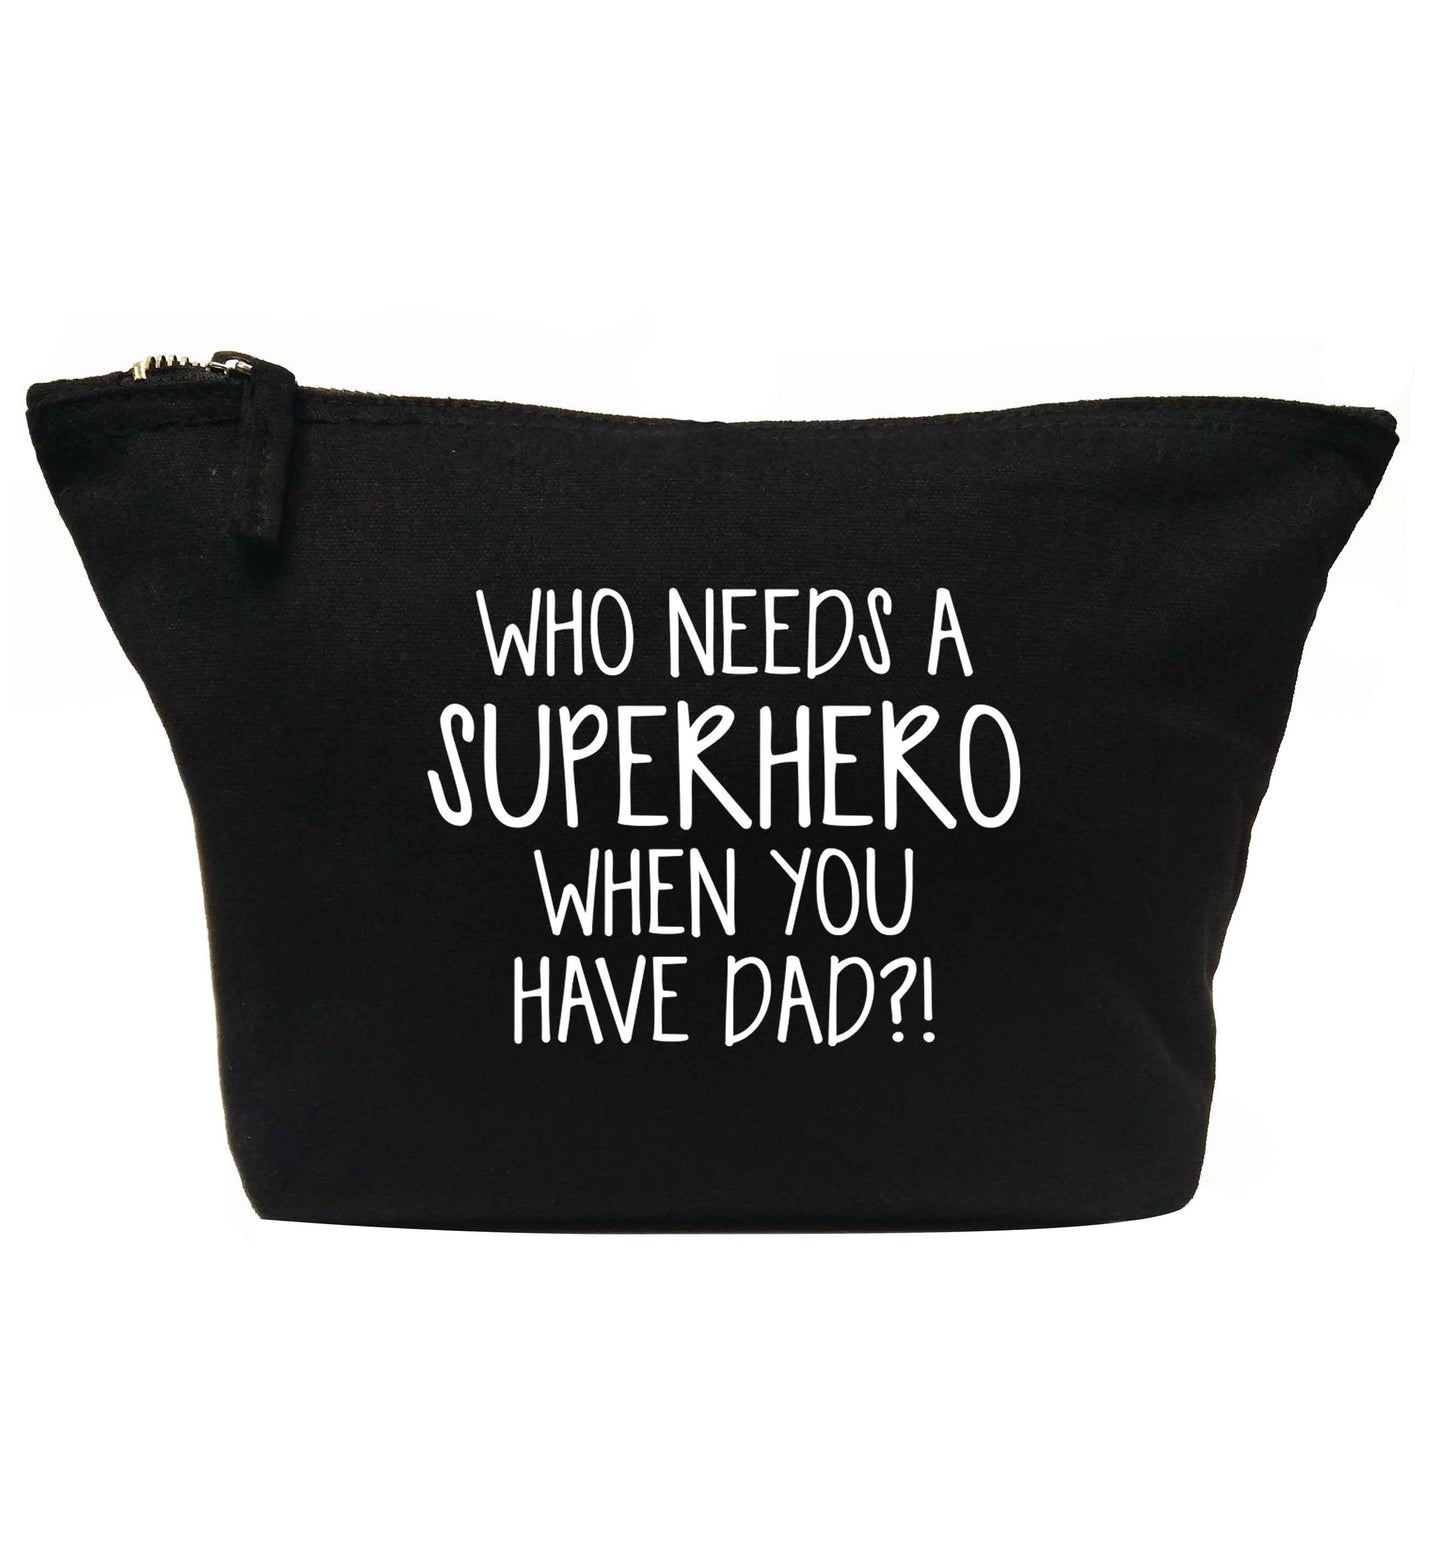 Who needs a superhero when you have dad! | Makeup / wash bag